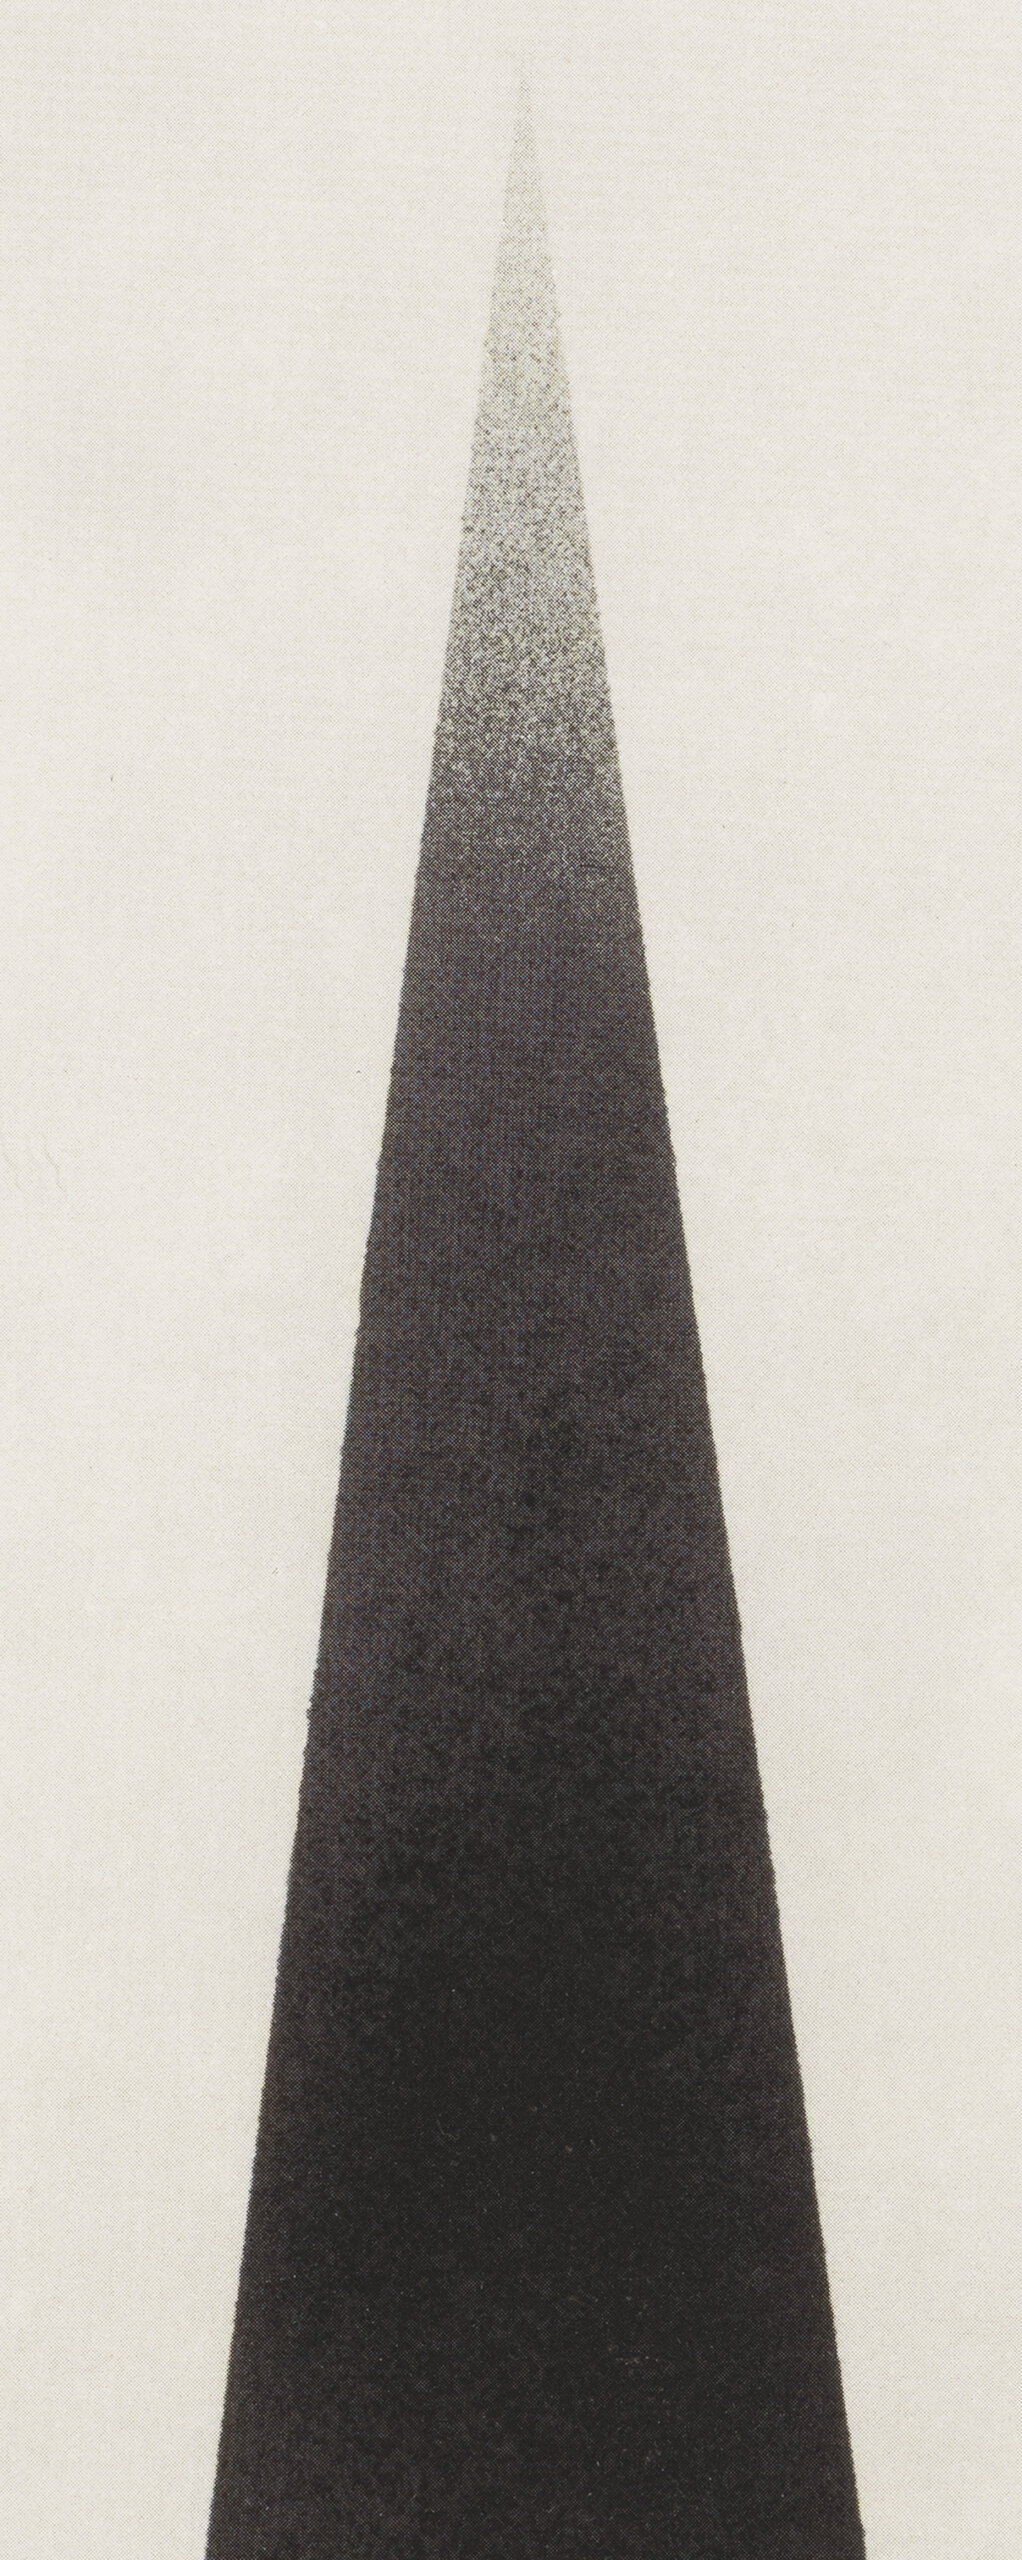 Leonhard Lapin “Must teravik”, 1982. Plm 41,5 x 39 cm.